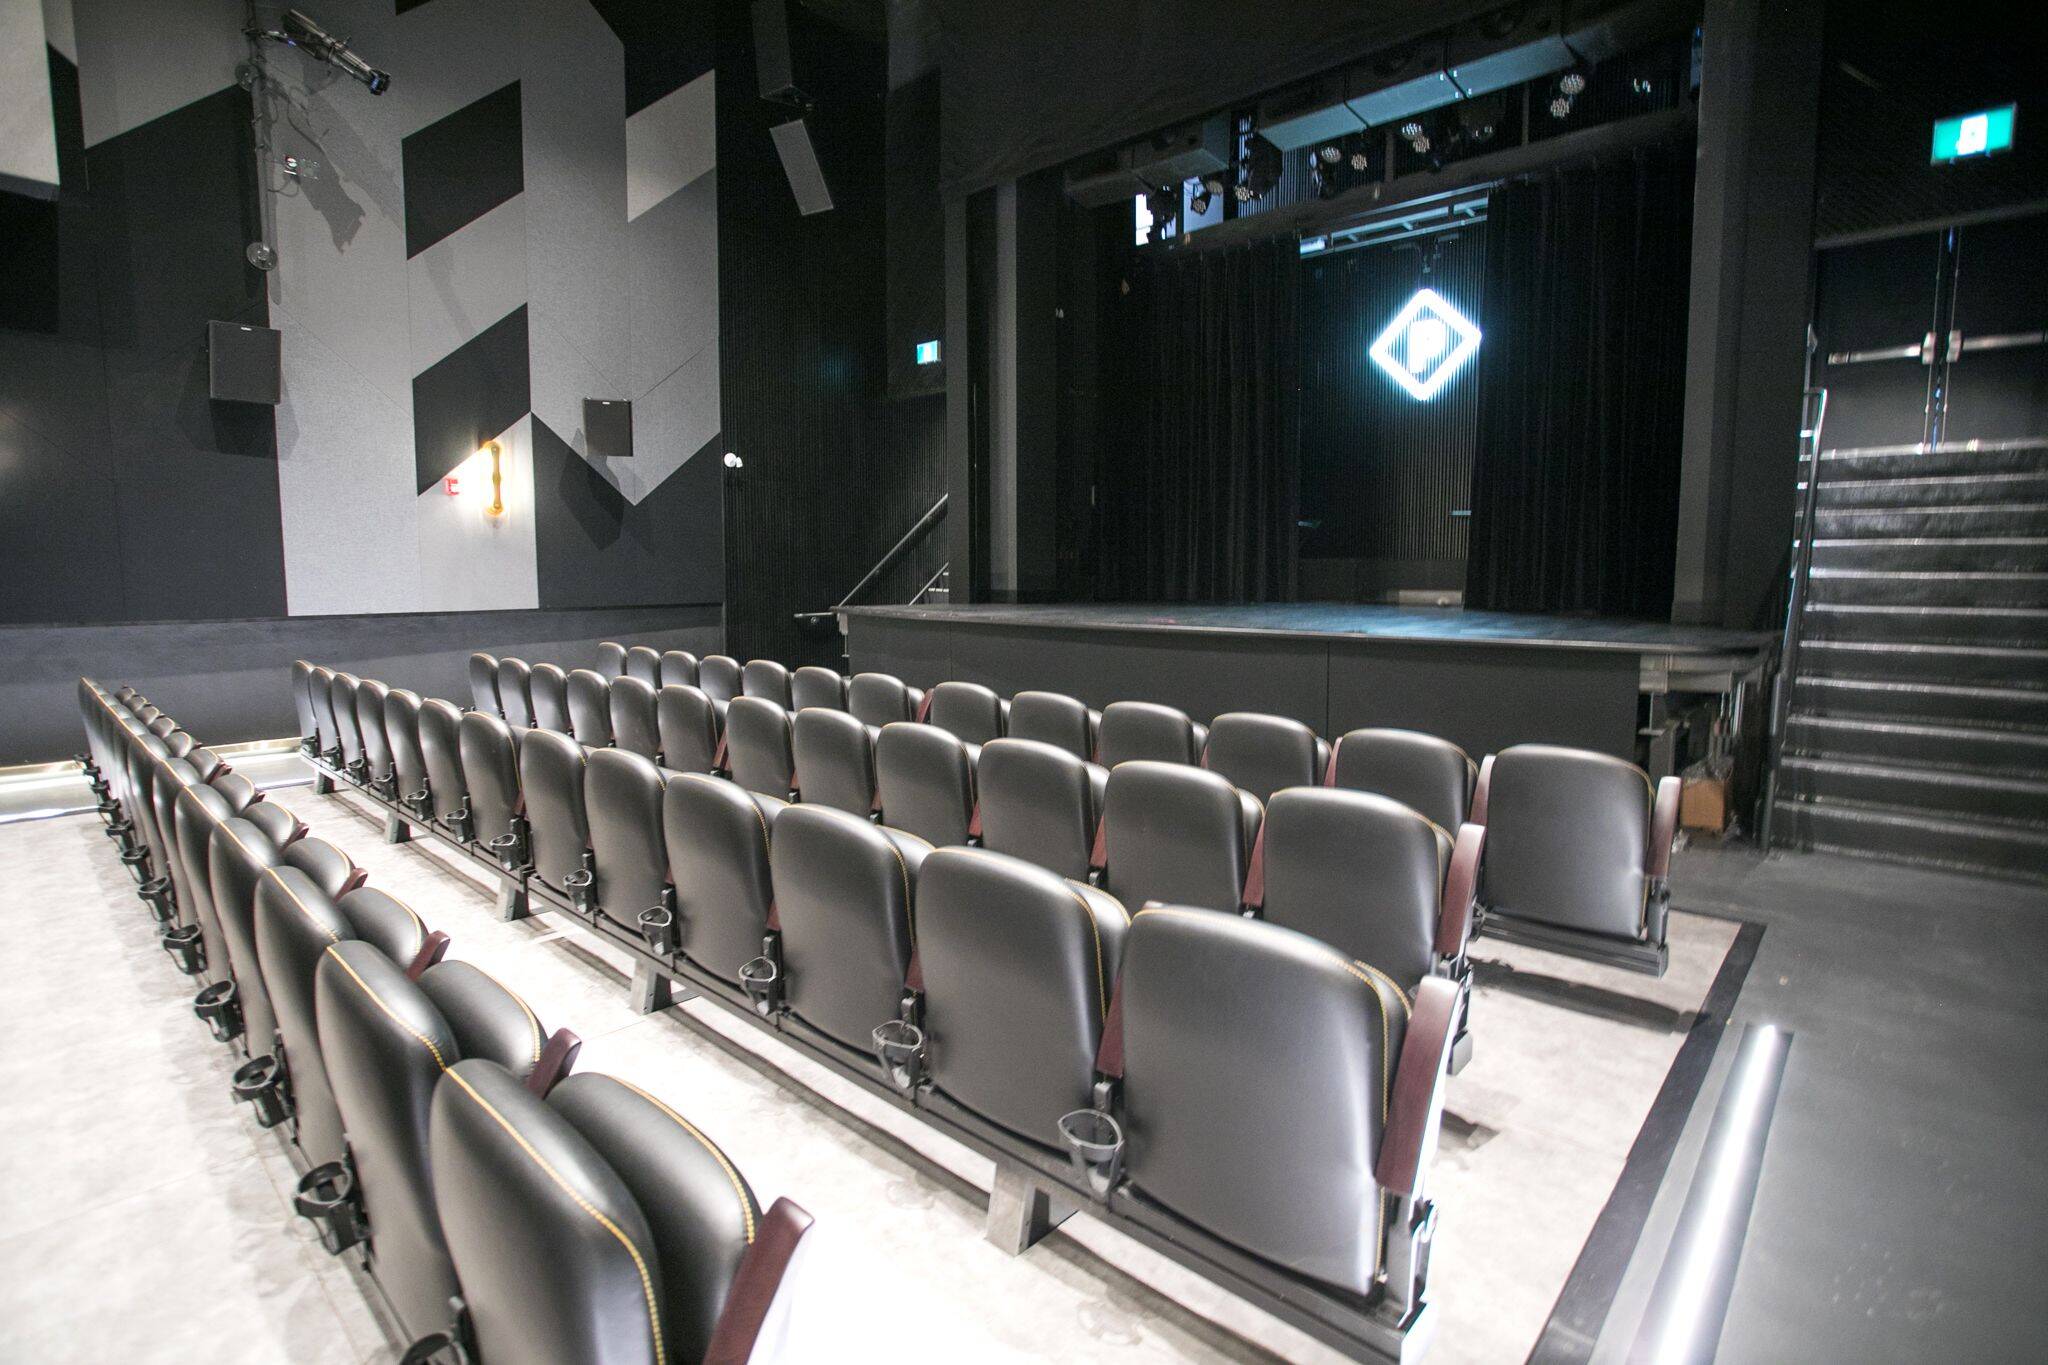 are movie theatres open in toronto